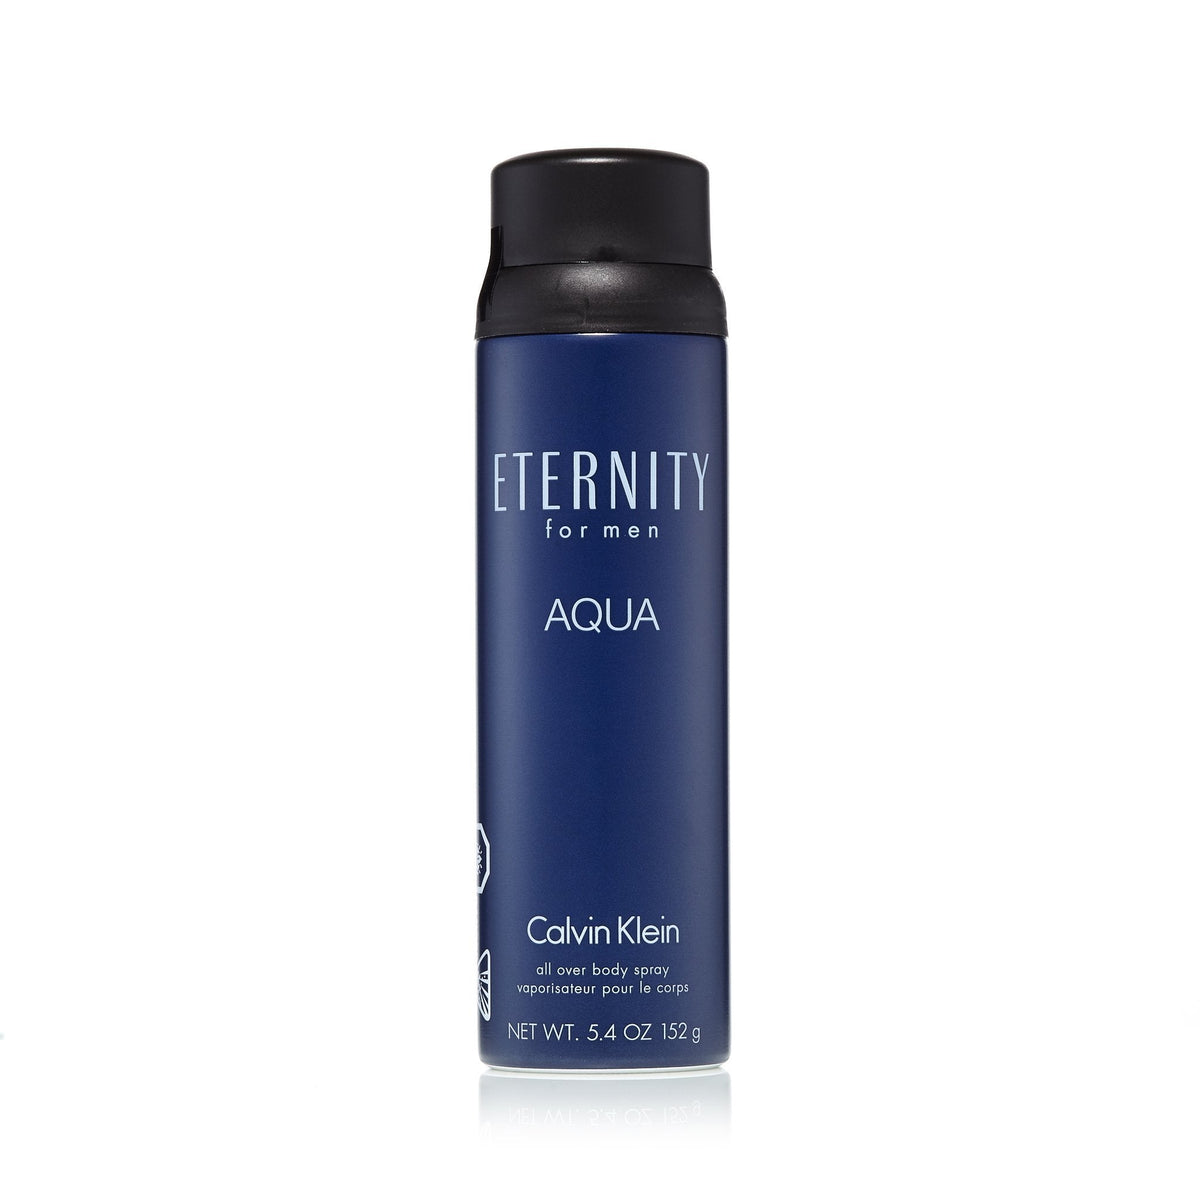 CK Eternity Aqua Body Spray for Men by Calvin Klein 5.4 oz.